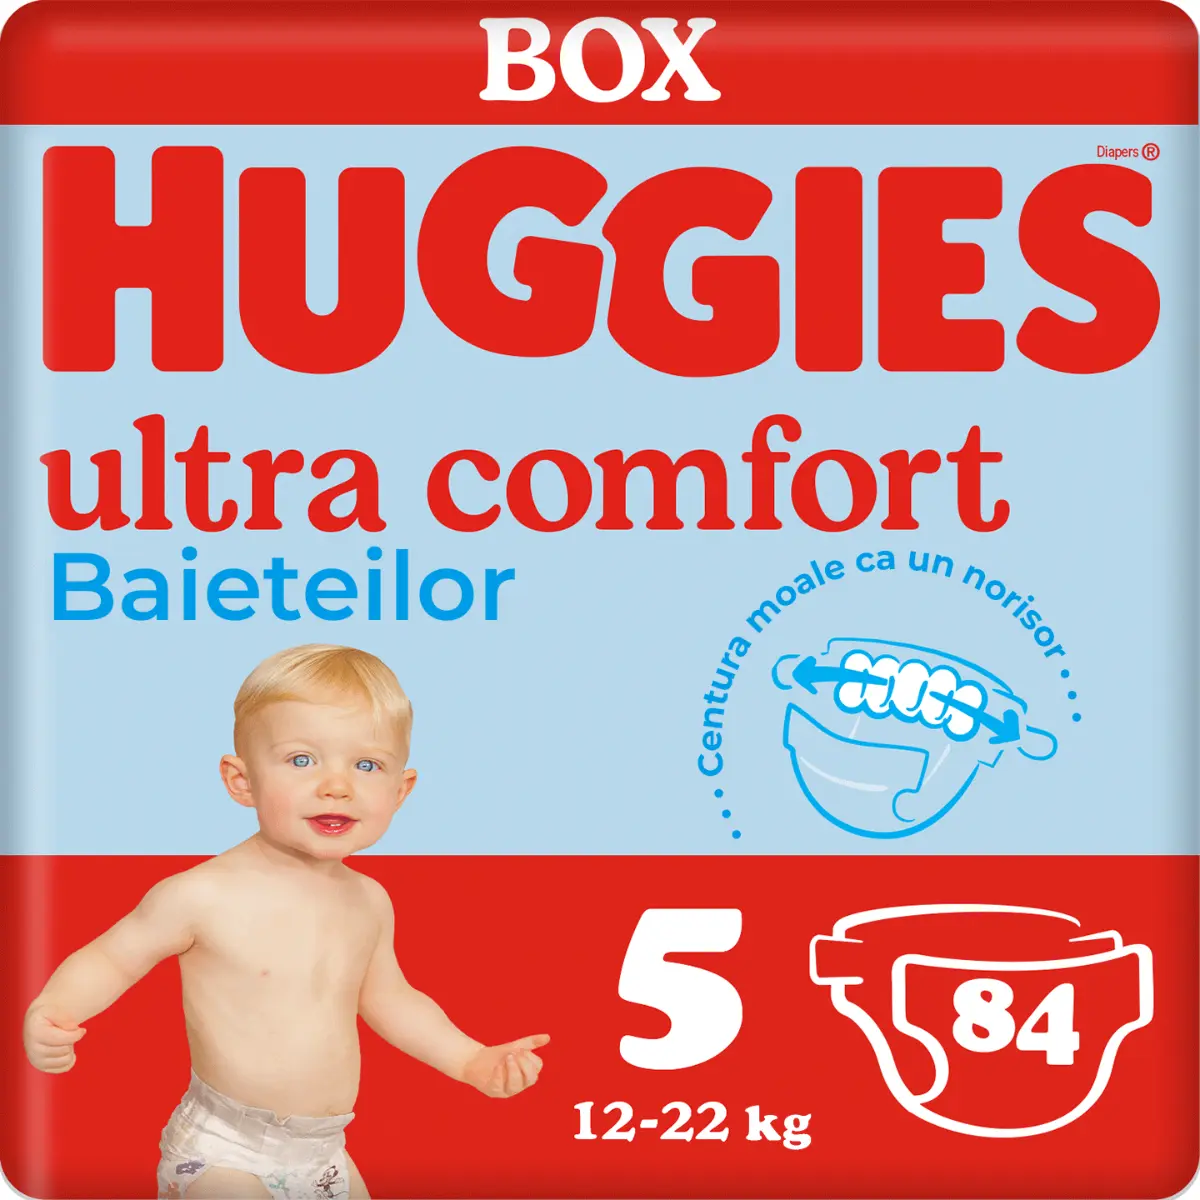 Scutece Huggies Boy Ultra Comfort Nr. 5, 12 -22 Kg, 84 bucati